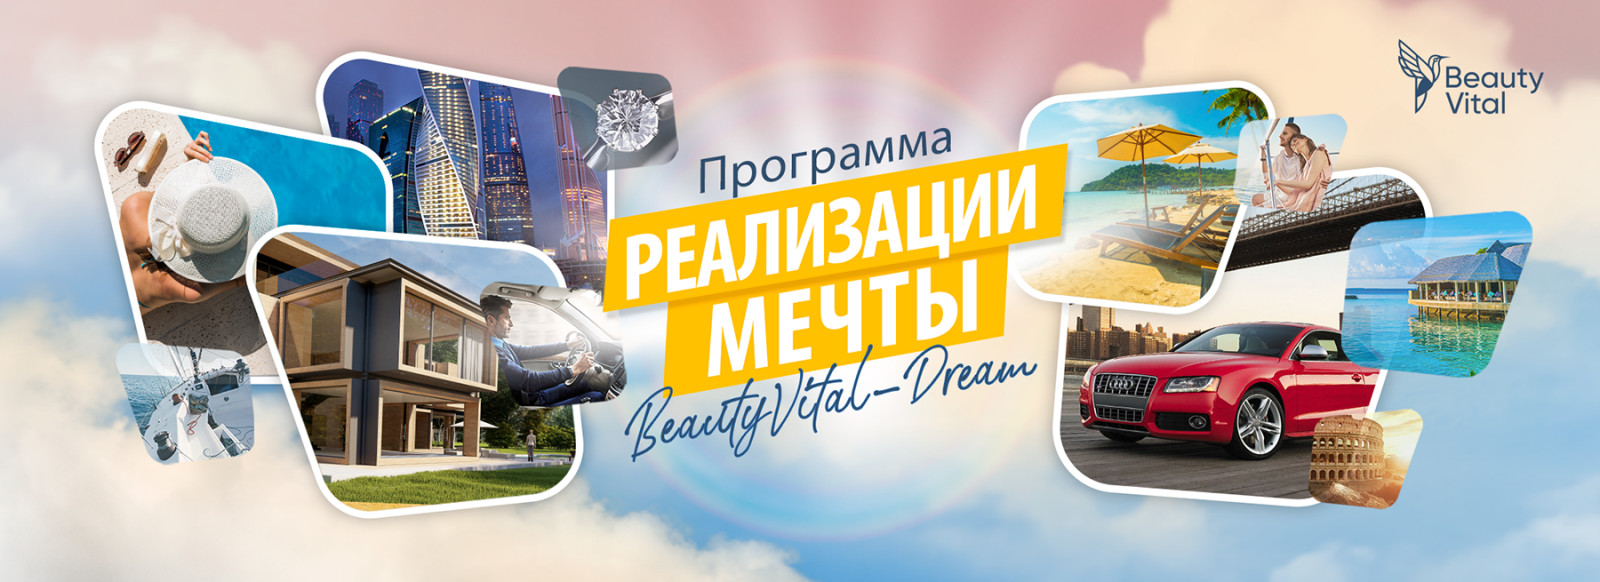 BeautyVital Dream – программа реализации мечты!